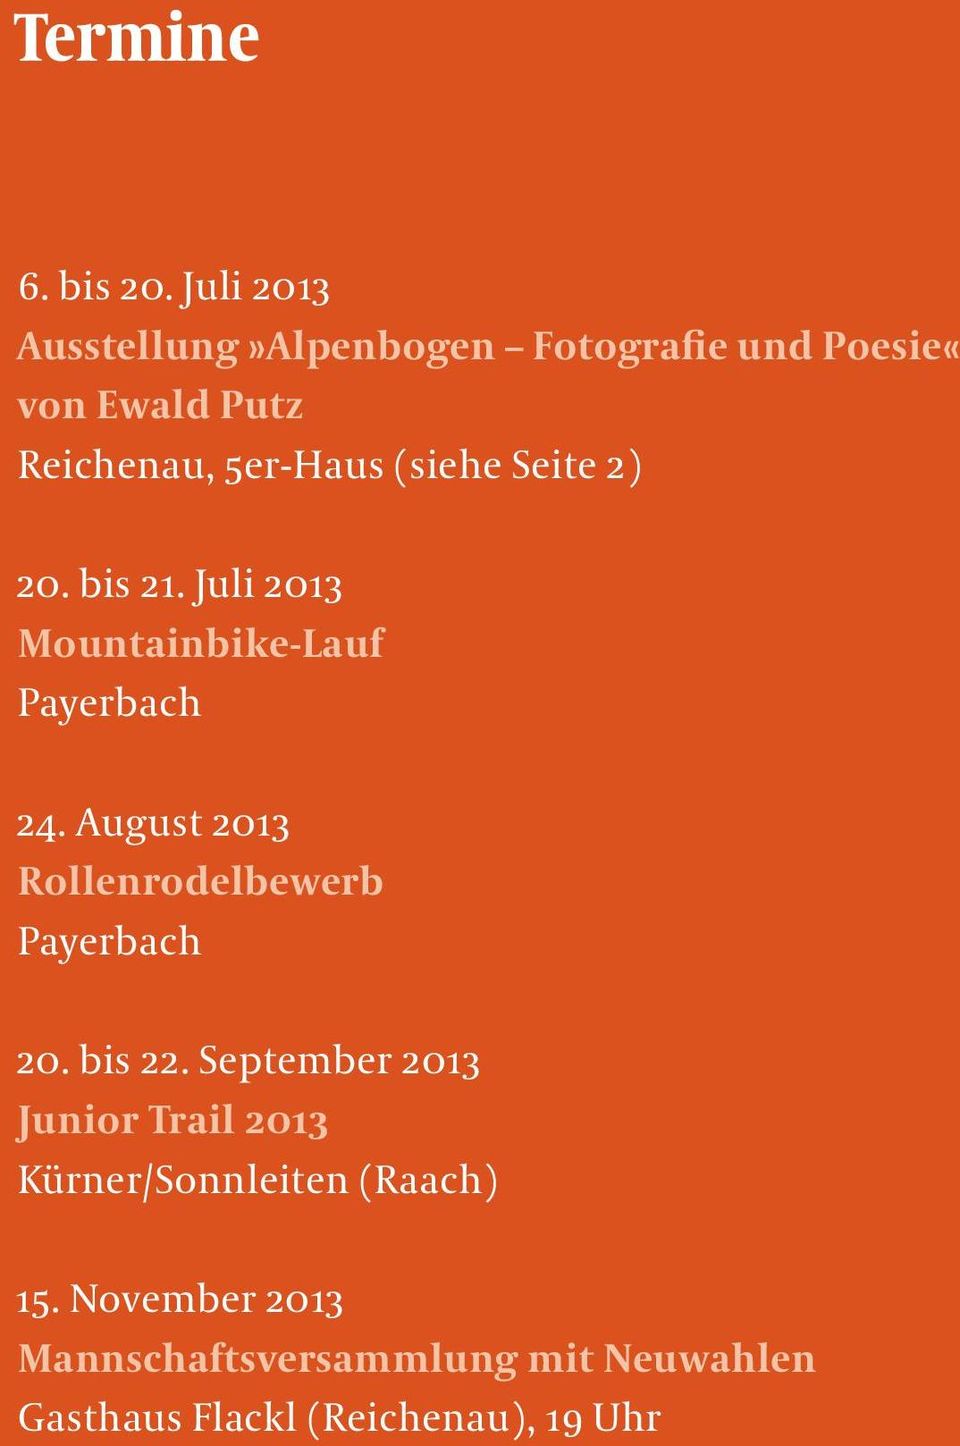 Seite 2) 20. bis 21. Juli 2013 Mountainbike-Lauf Payerbach 24.